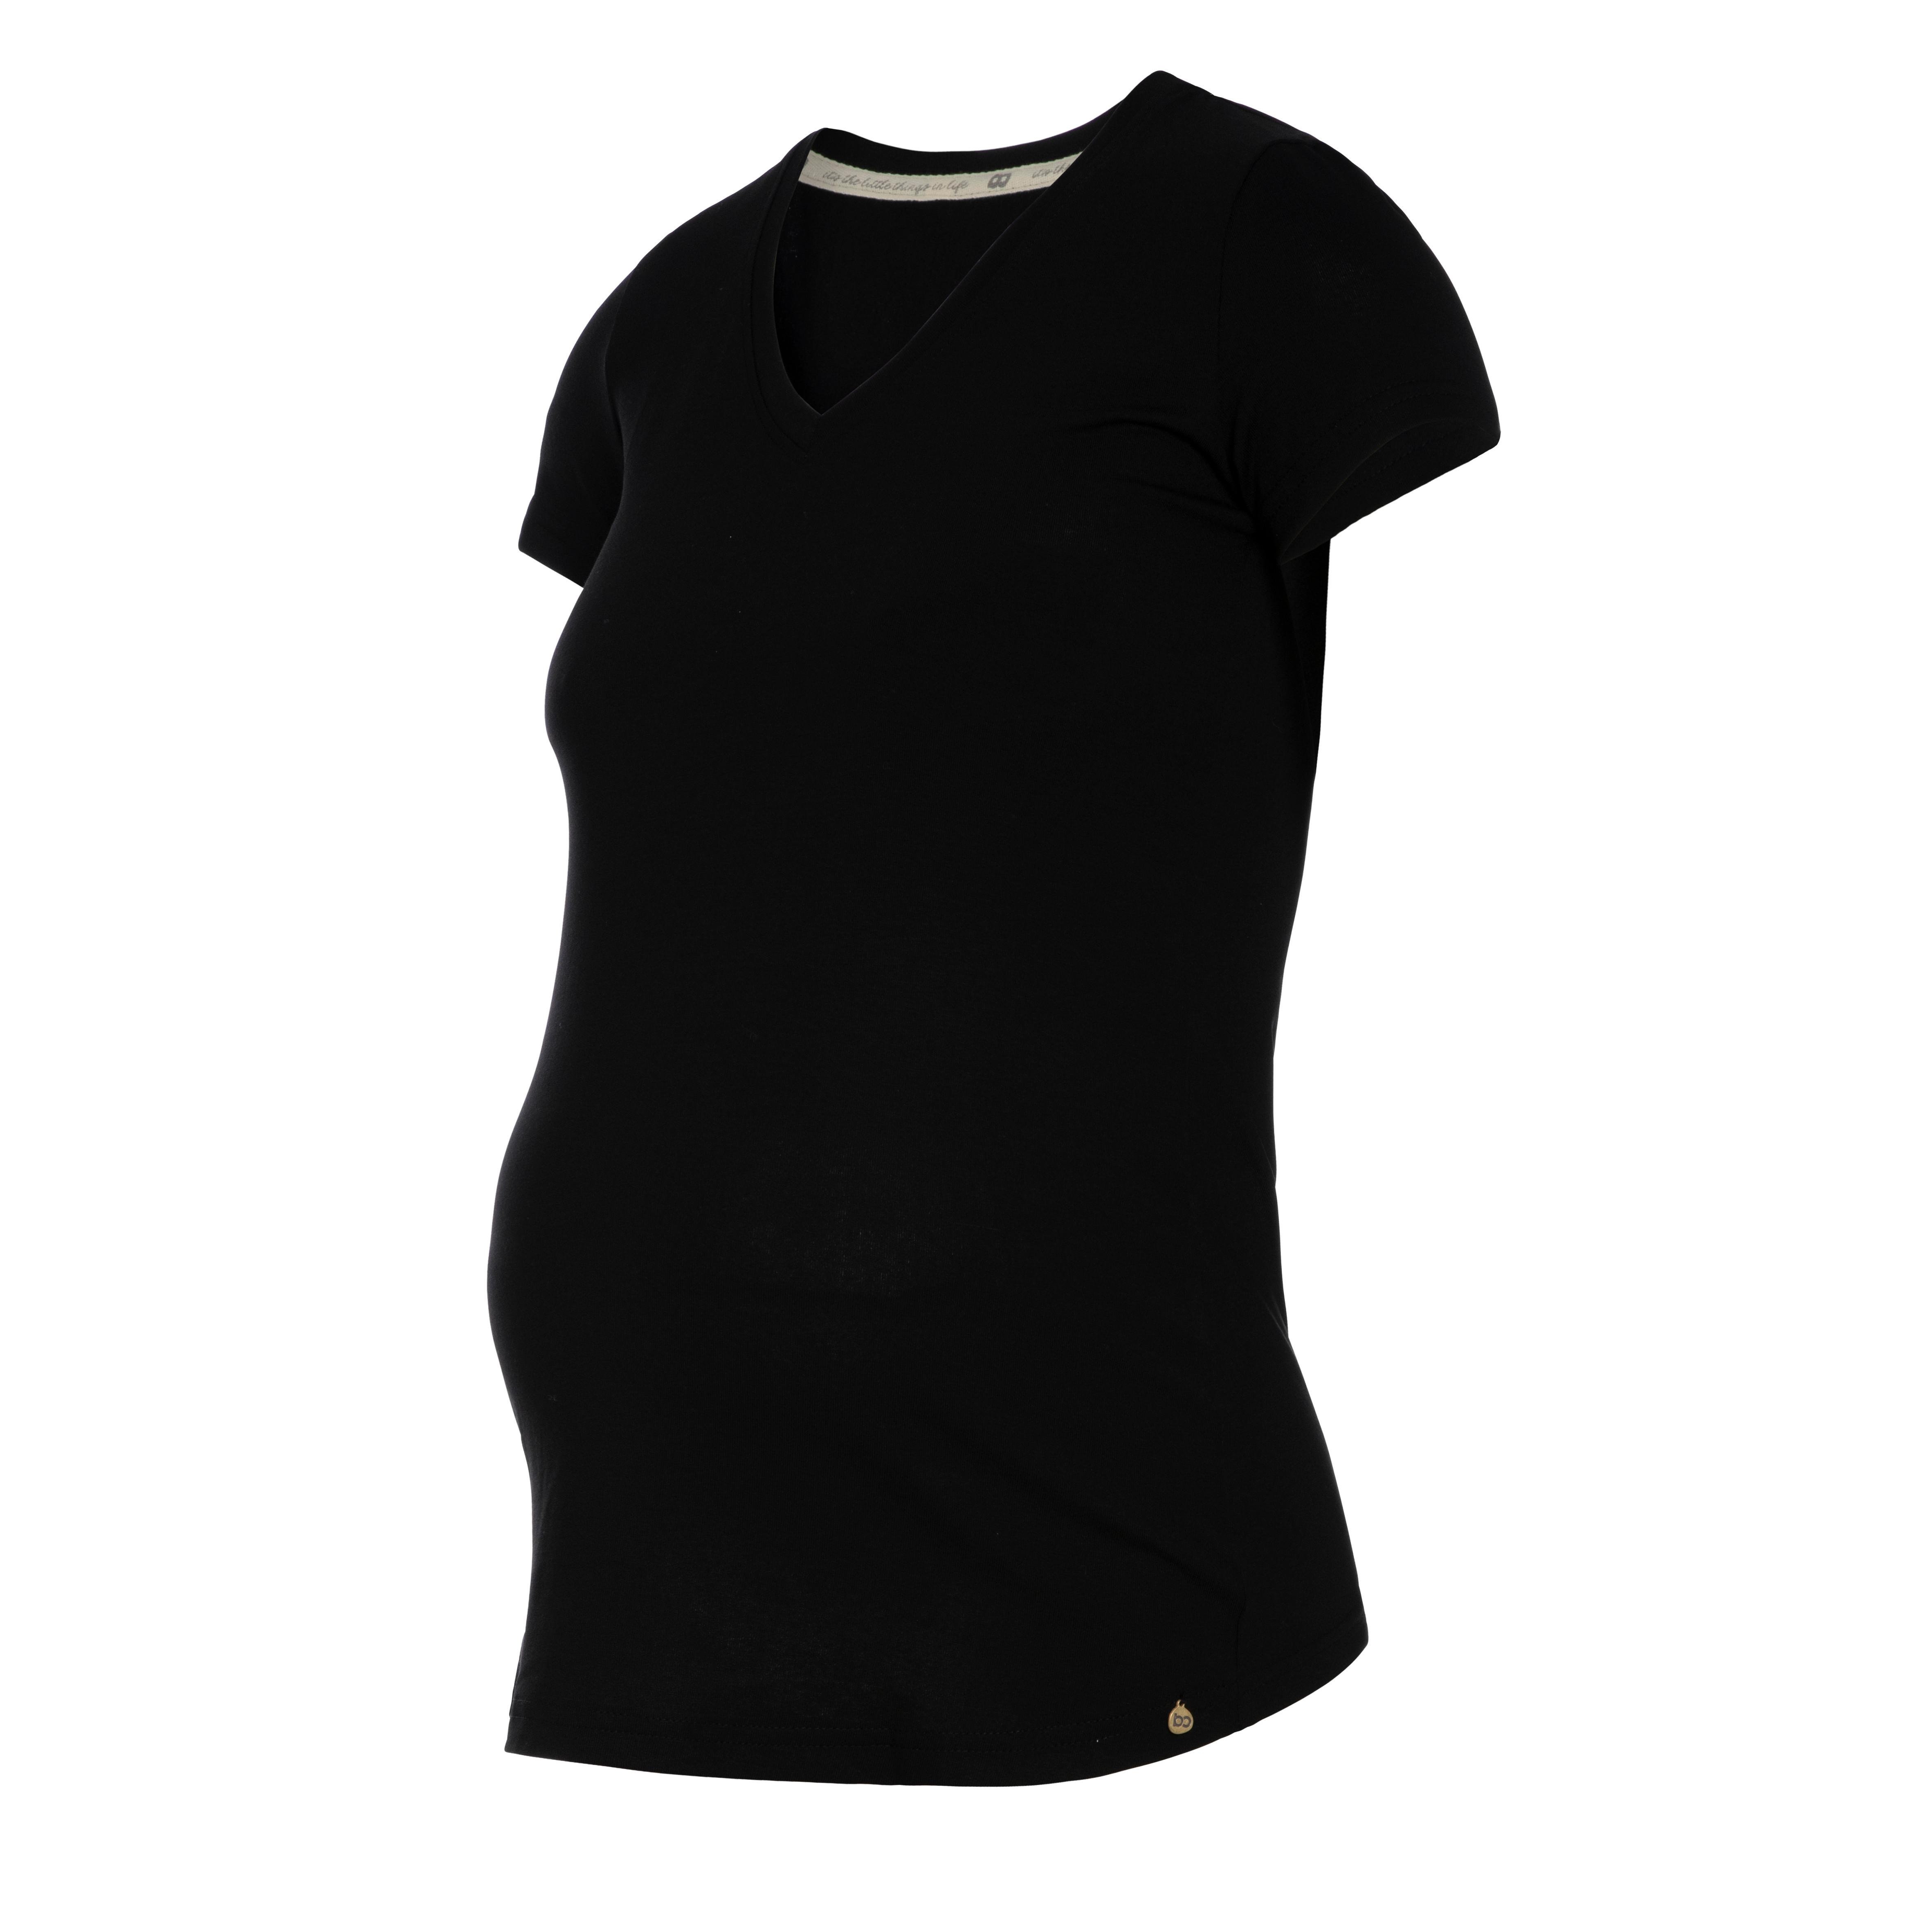 T-shirt de maternité Glow noir - XL